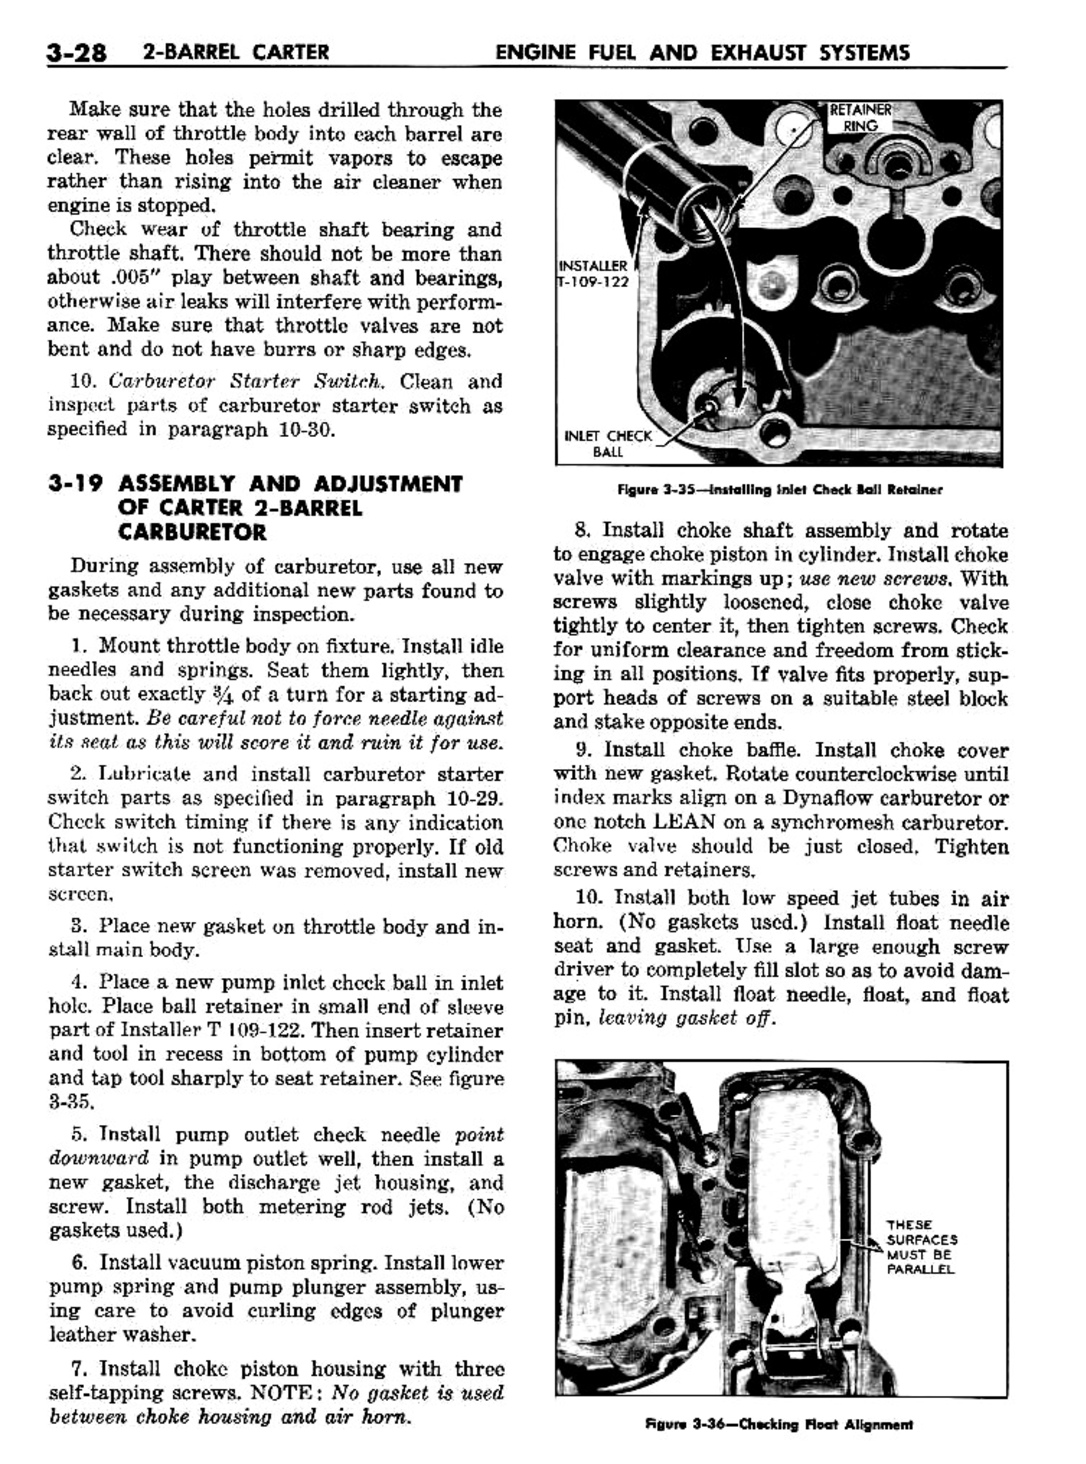 n_04 1957 Buick Shop Manual - Engine Fuel & Exhaust-028-028.jpg